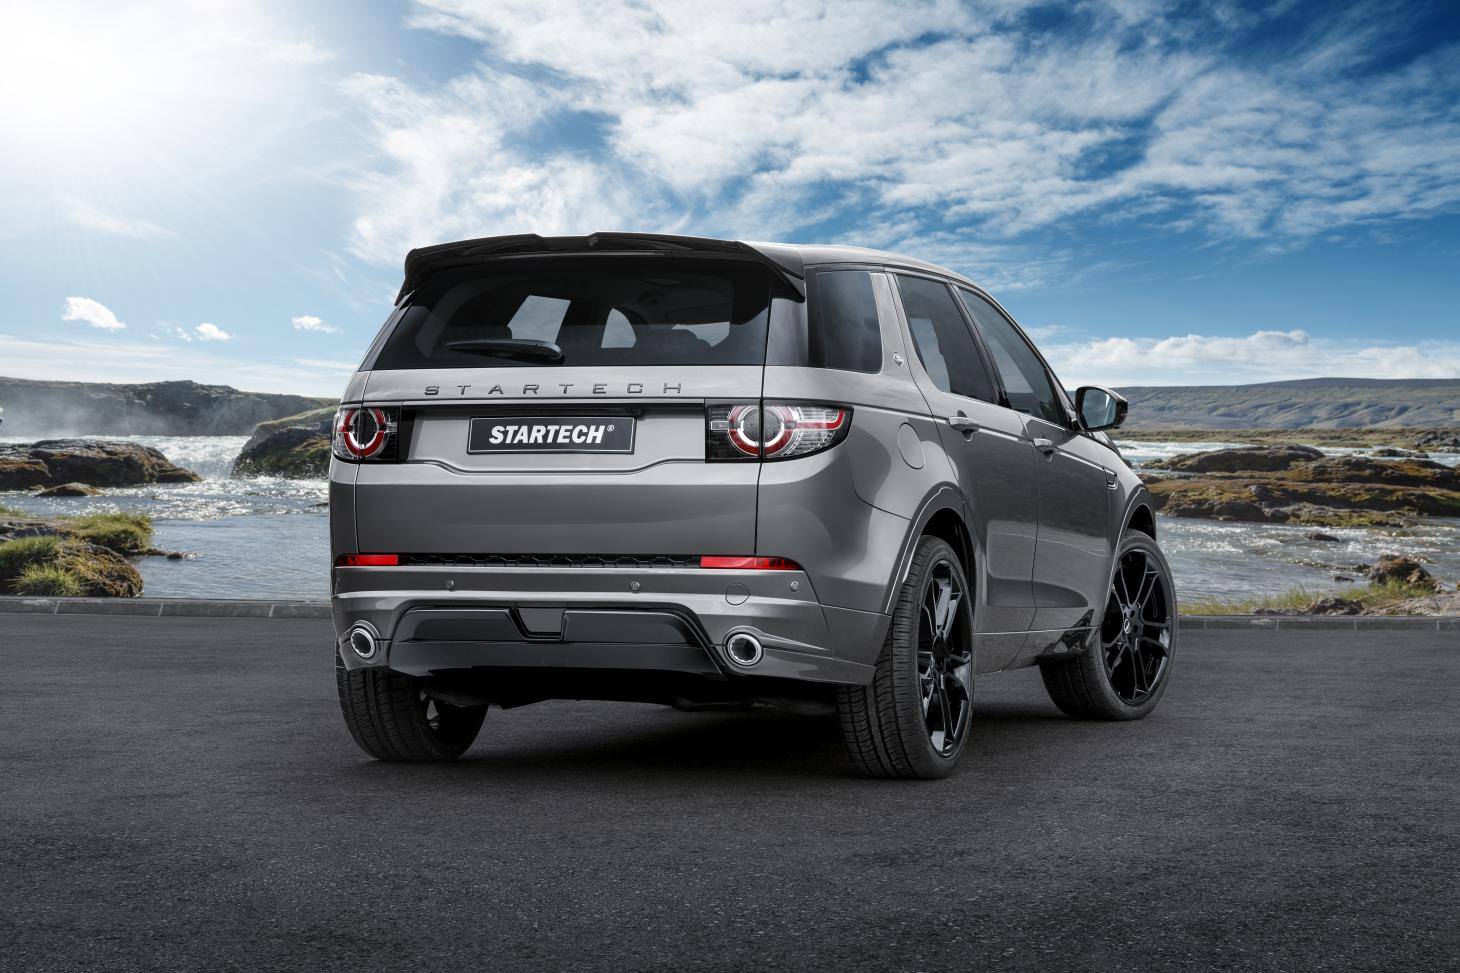 Startech-Land-Rover-Discovery-Sport-autonovosti.me-5